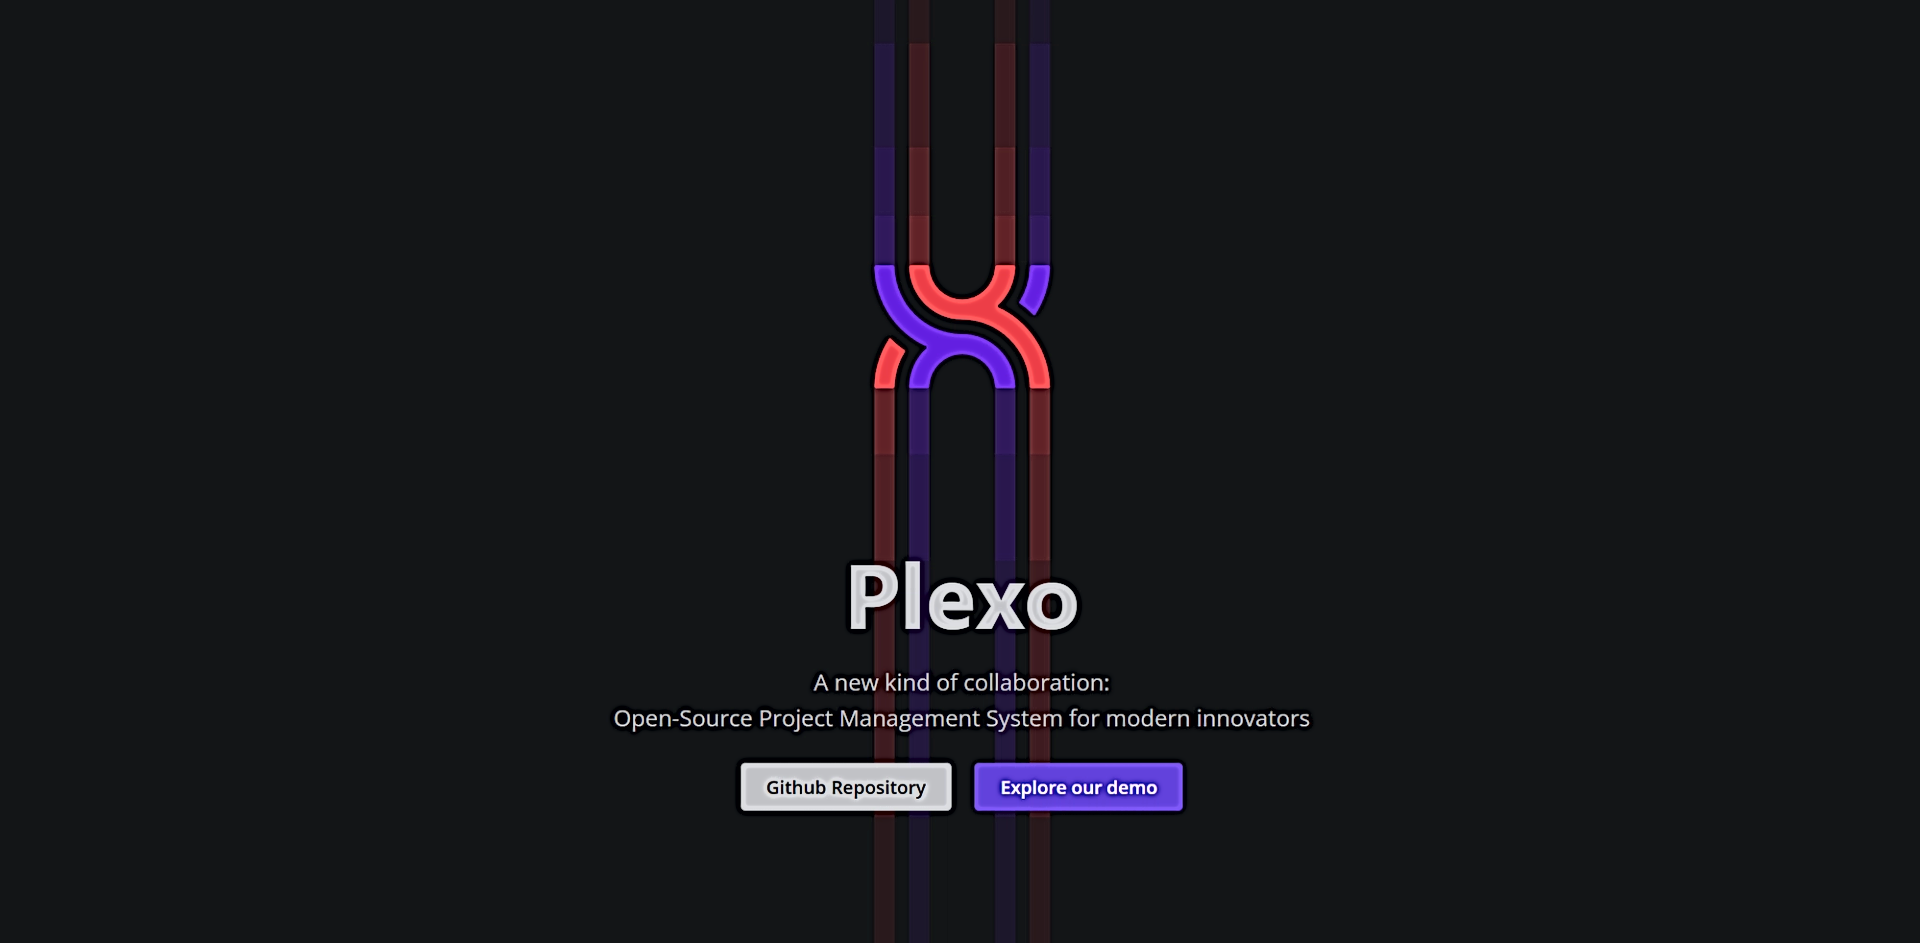 Plexo featured